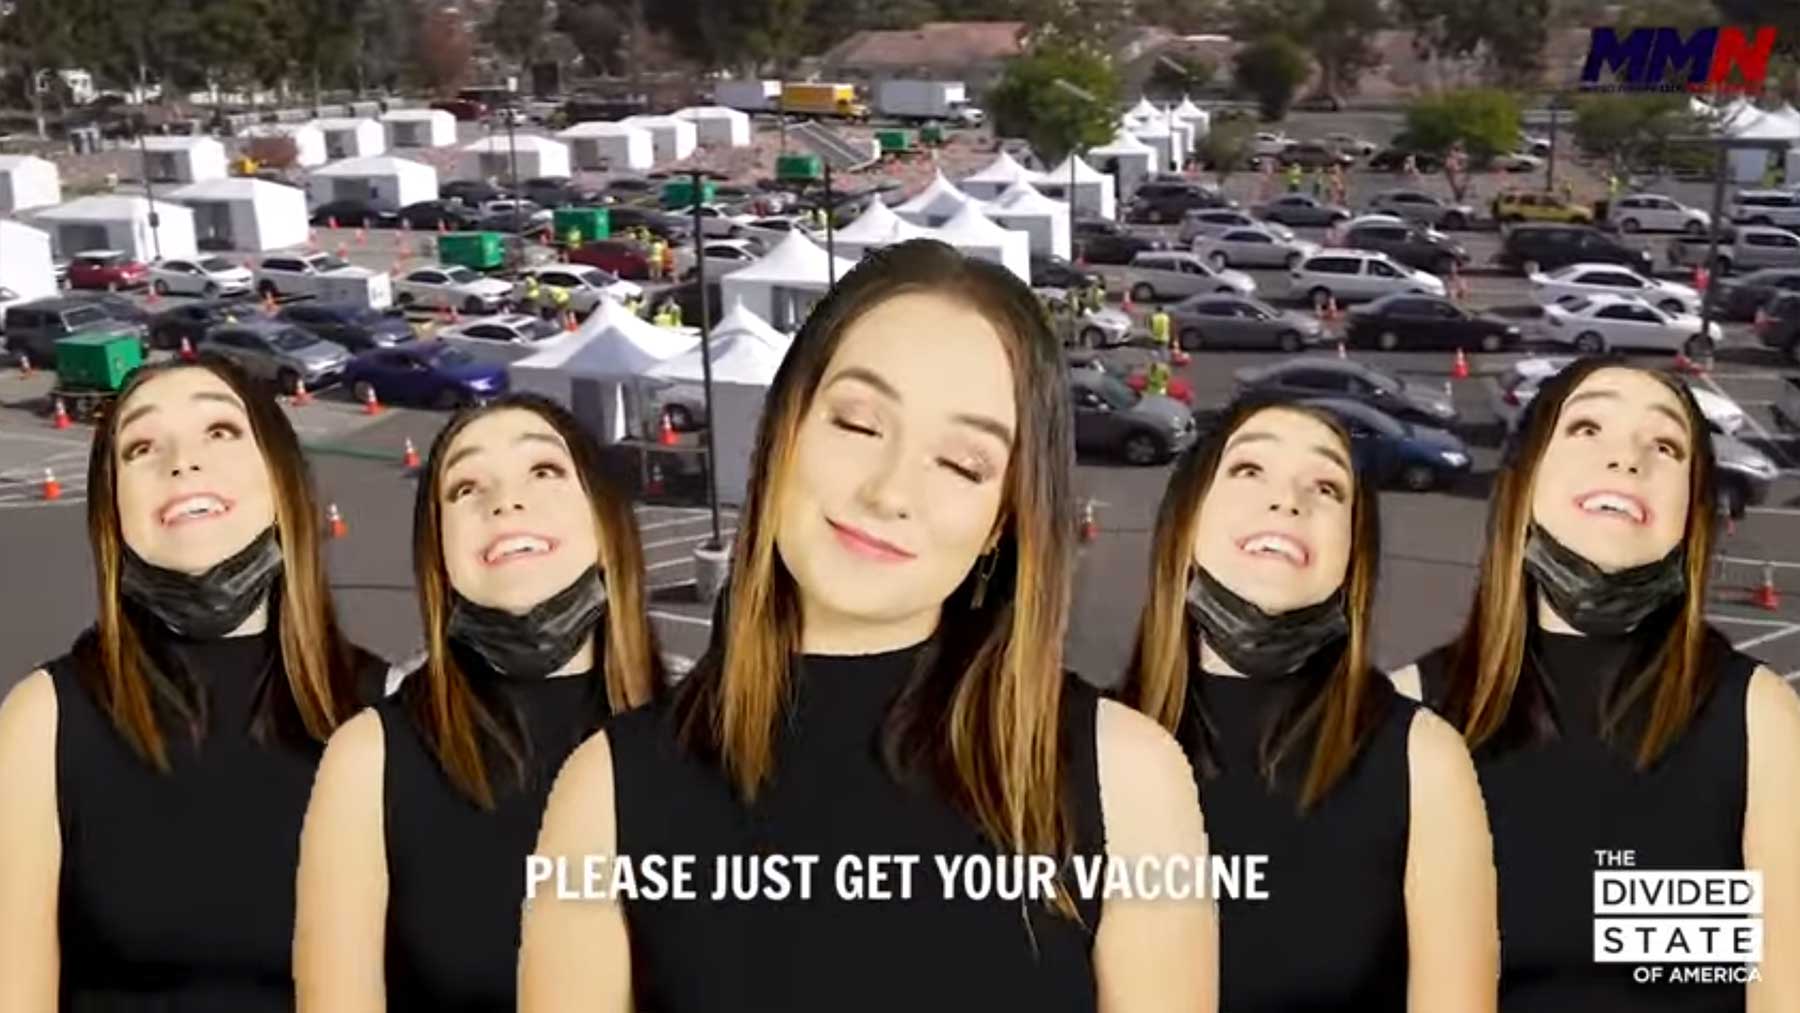 Queen-Parodie-Cover: "GET VACCINATED!" statt "Killer Queen" get-vaccinated-parody 